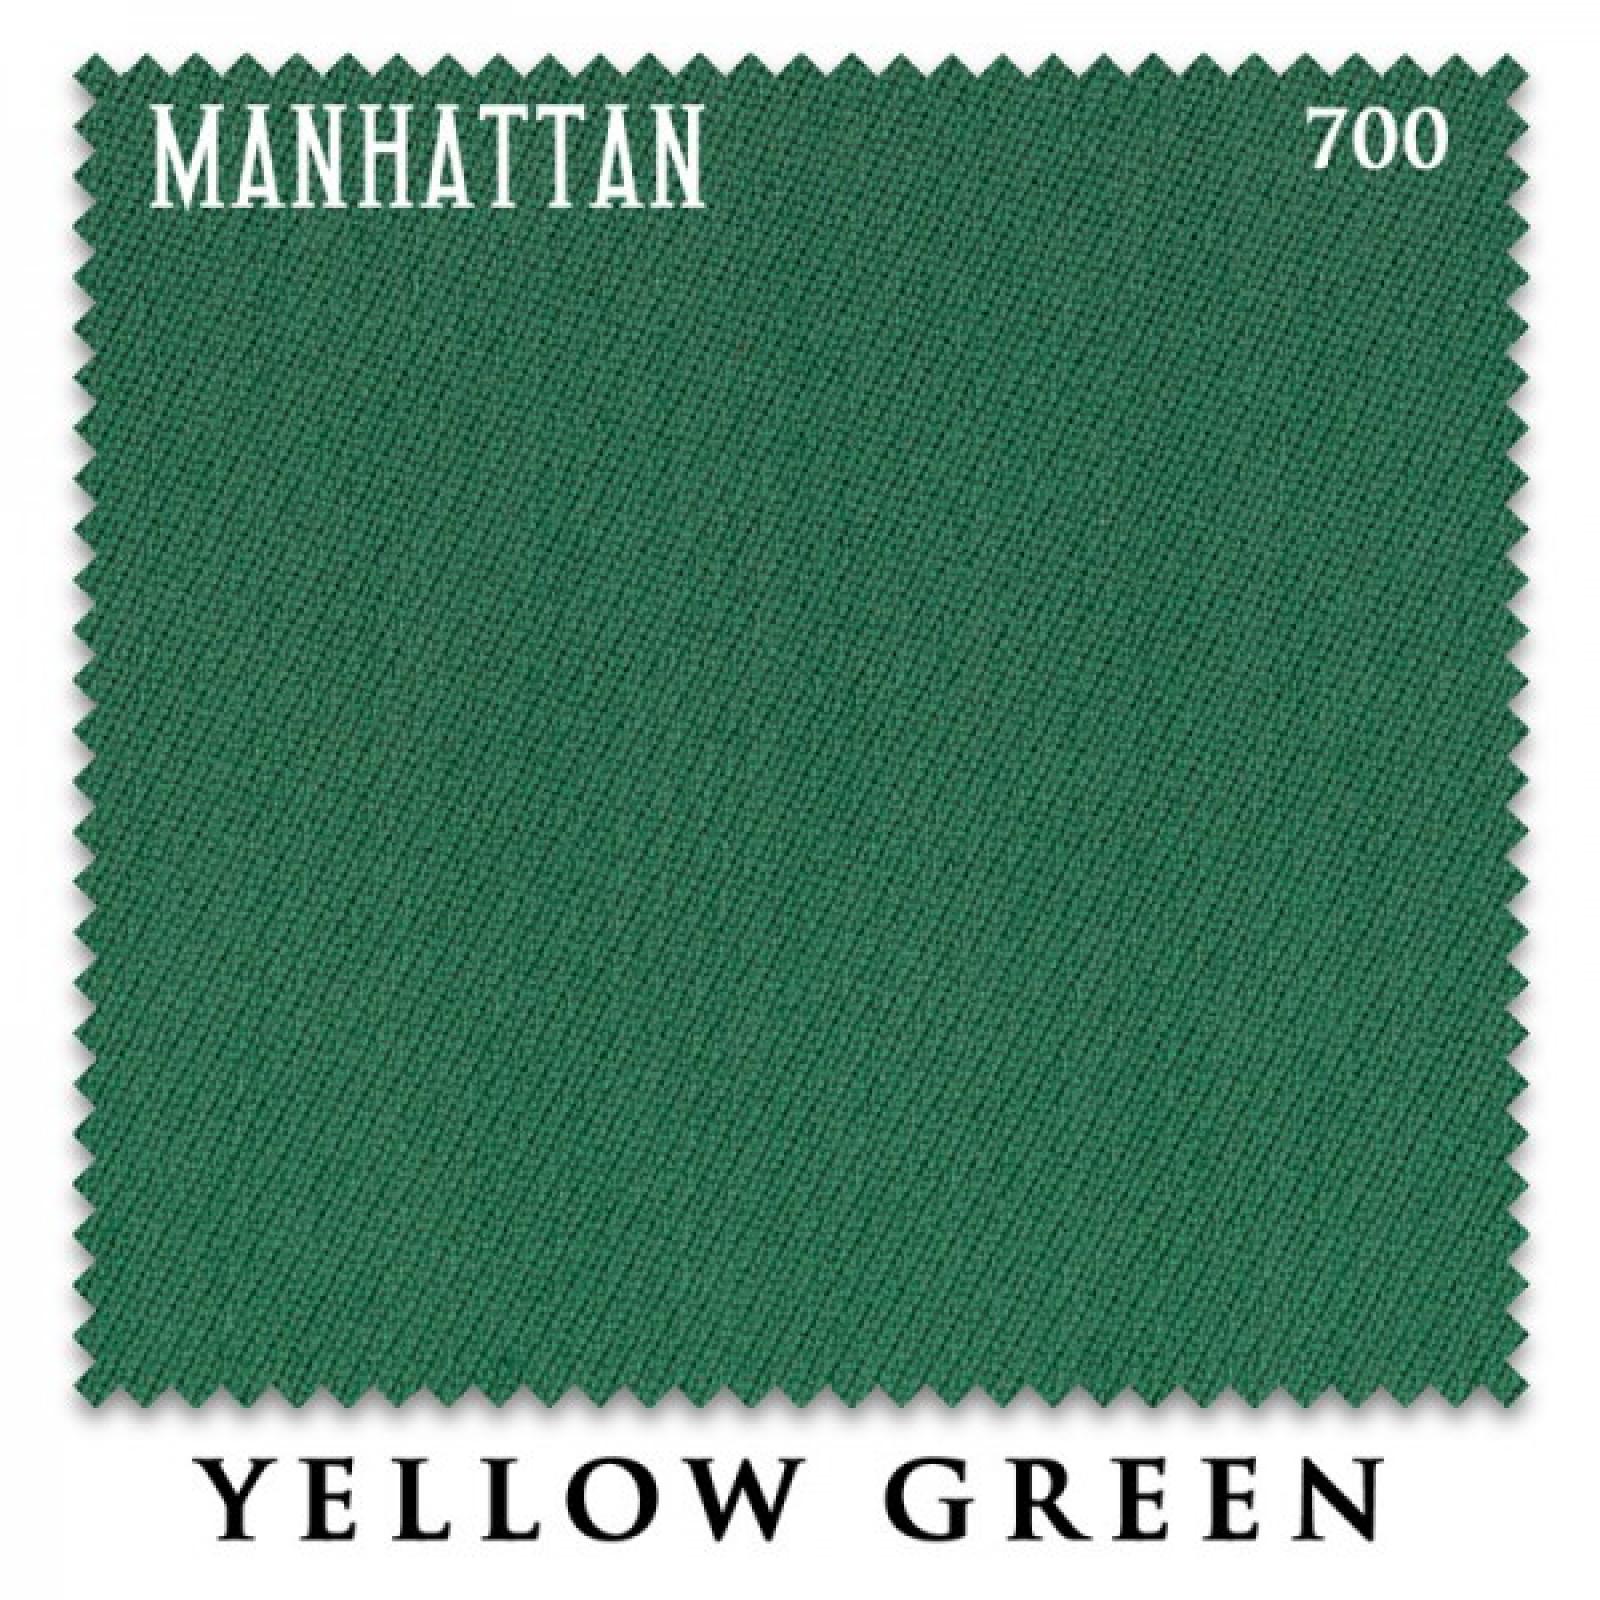 Цвет сукно. Сукно Eurosprint 70 Rus Pro 198см Yellow Green. Сукно Manhattan 700. Yellow Green сукно Simonis. Бильярдное сукно Euro Pro 50 Yellow Green.